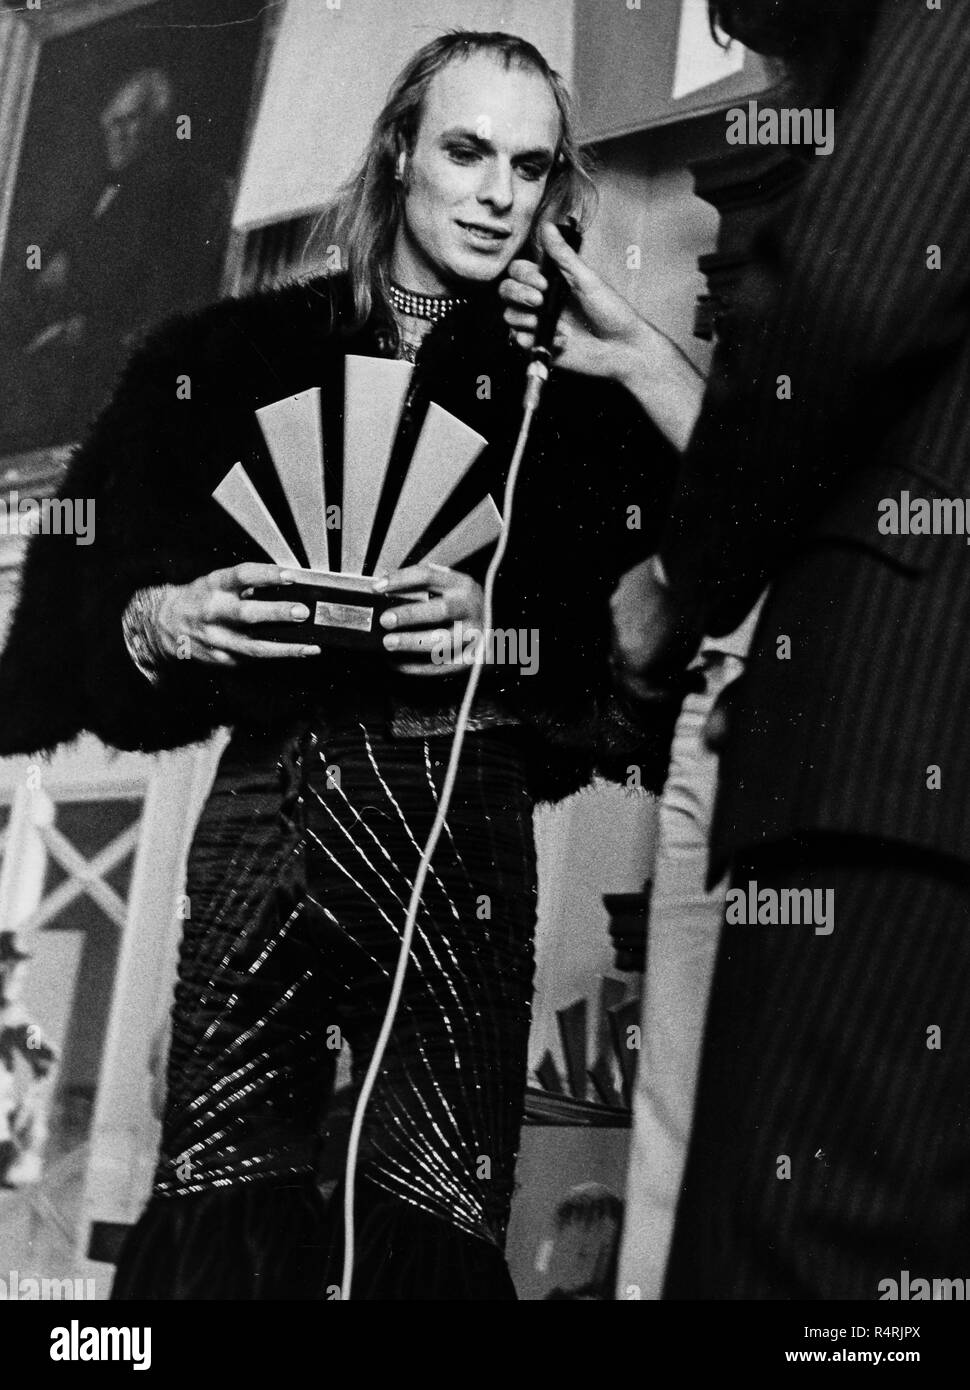 Brian Eno, roxy music, Melody Maker awards, 1970 Banque D'Images